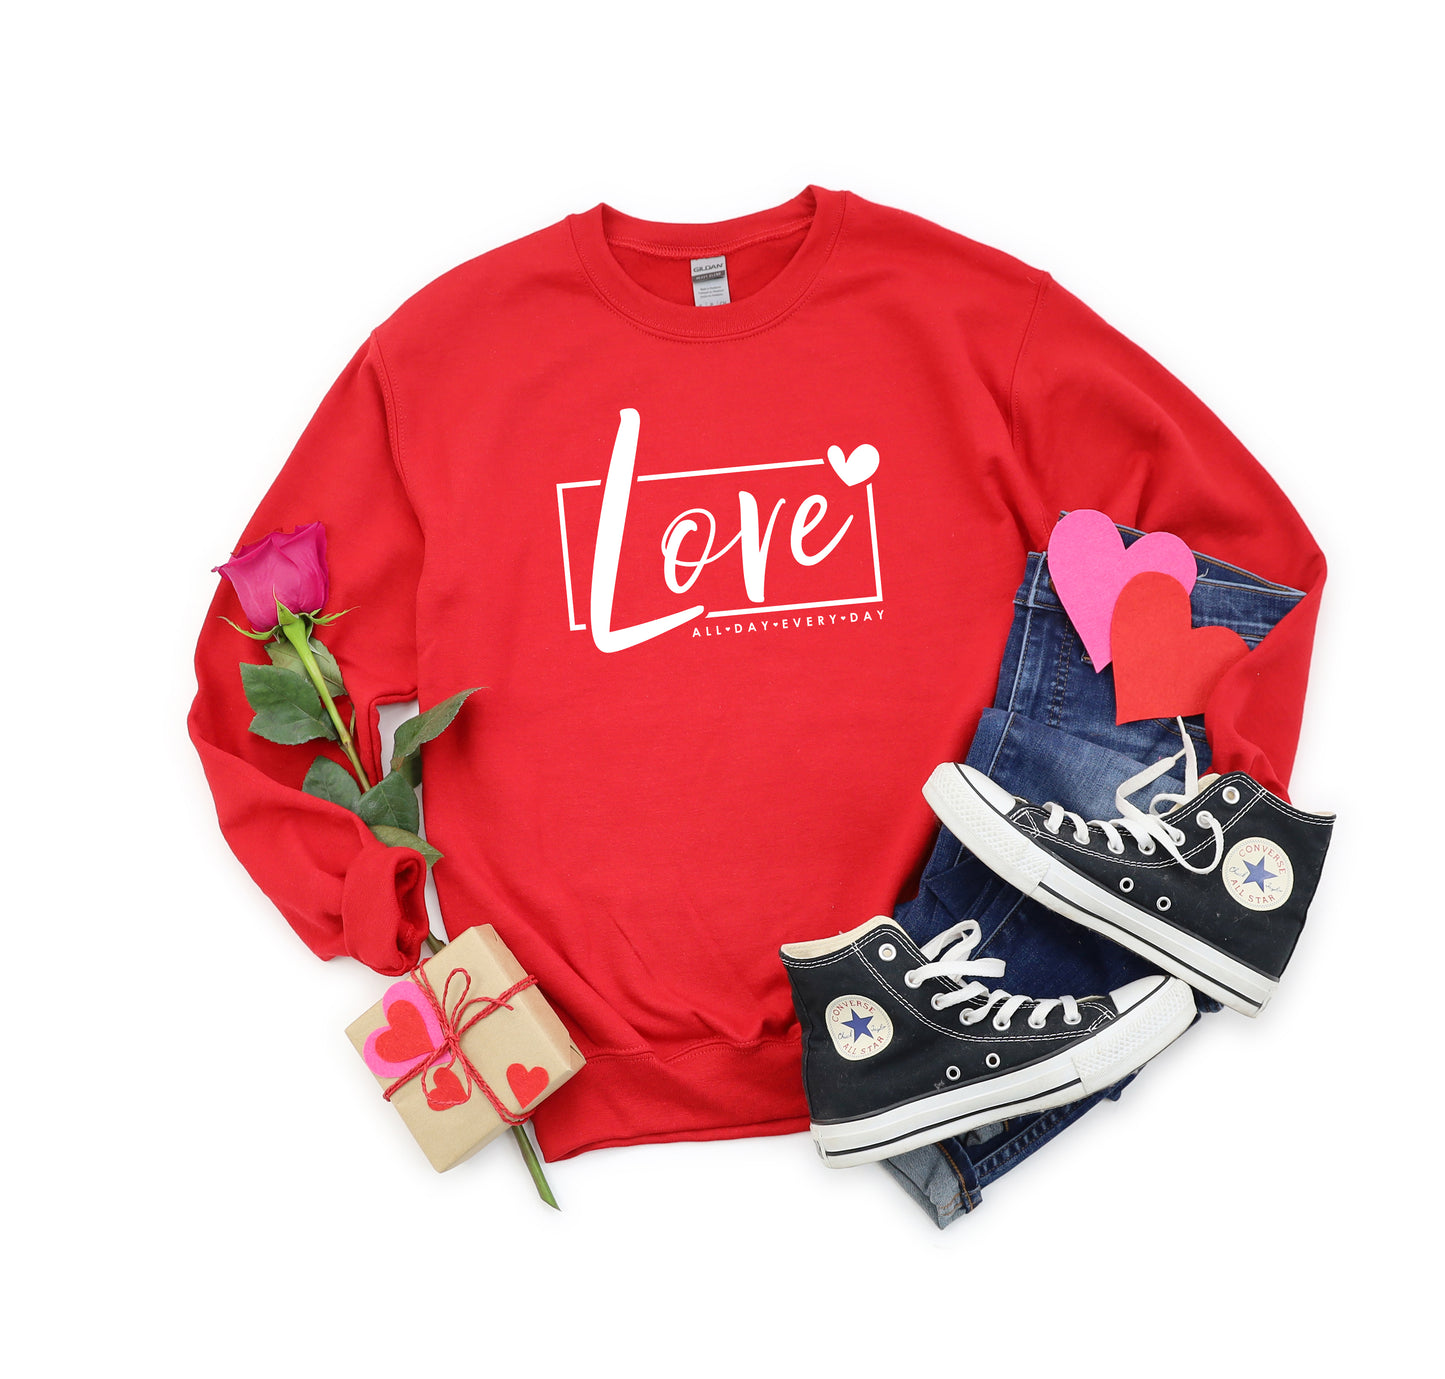 Love All Day Everyday Box | Sweatshirt